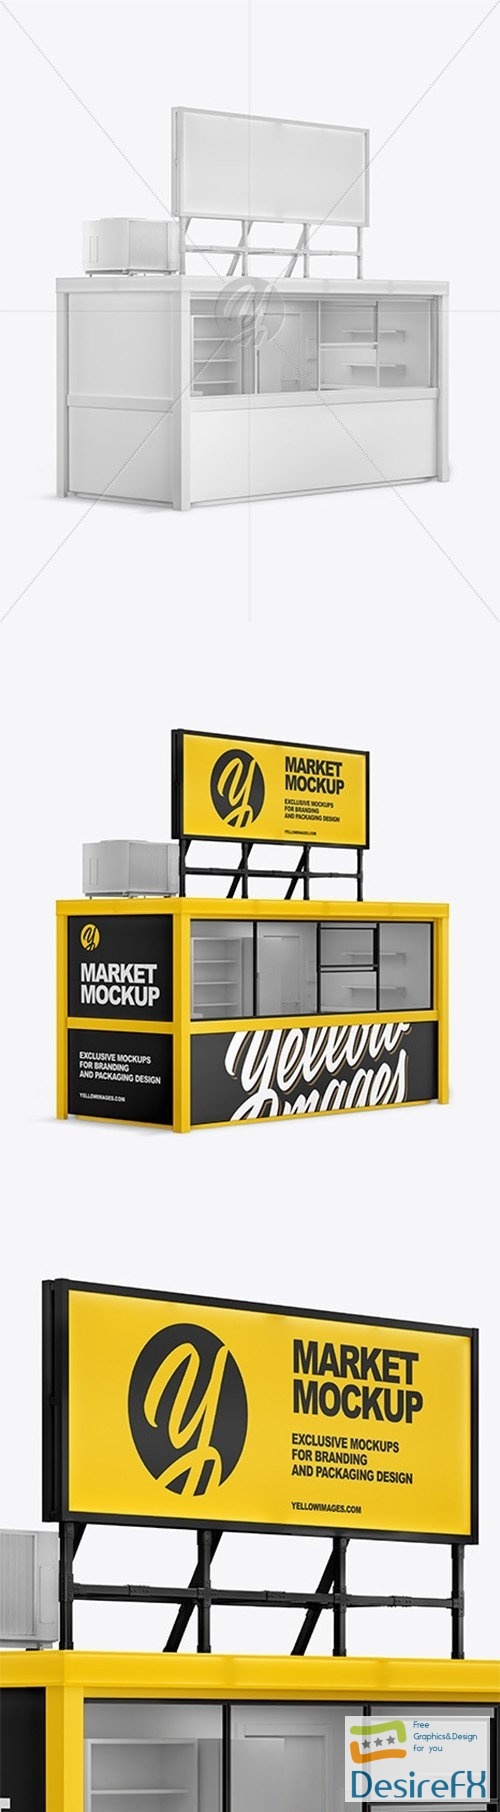 Market Mockup 56979